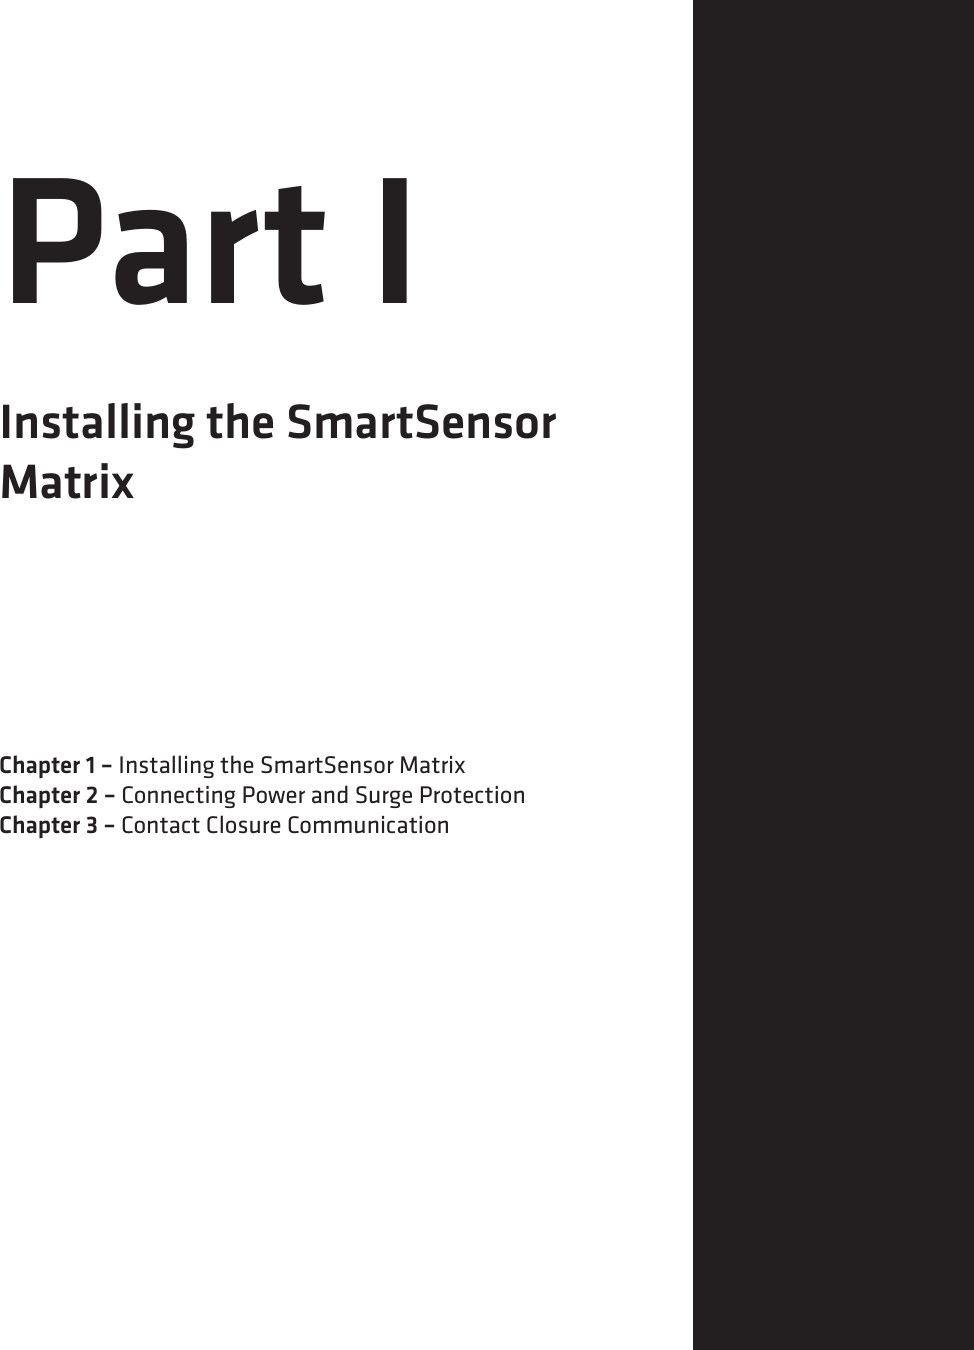 Part IInstalling the SmartSensor  MatrixChapter 1 – Installing the SmartSensor MatrixChapter 2 – Connecting Power and Surge ProtectionChapter 3 – Contact Closure Communication